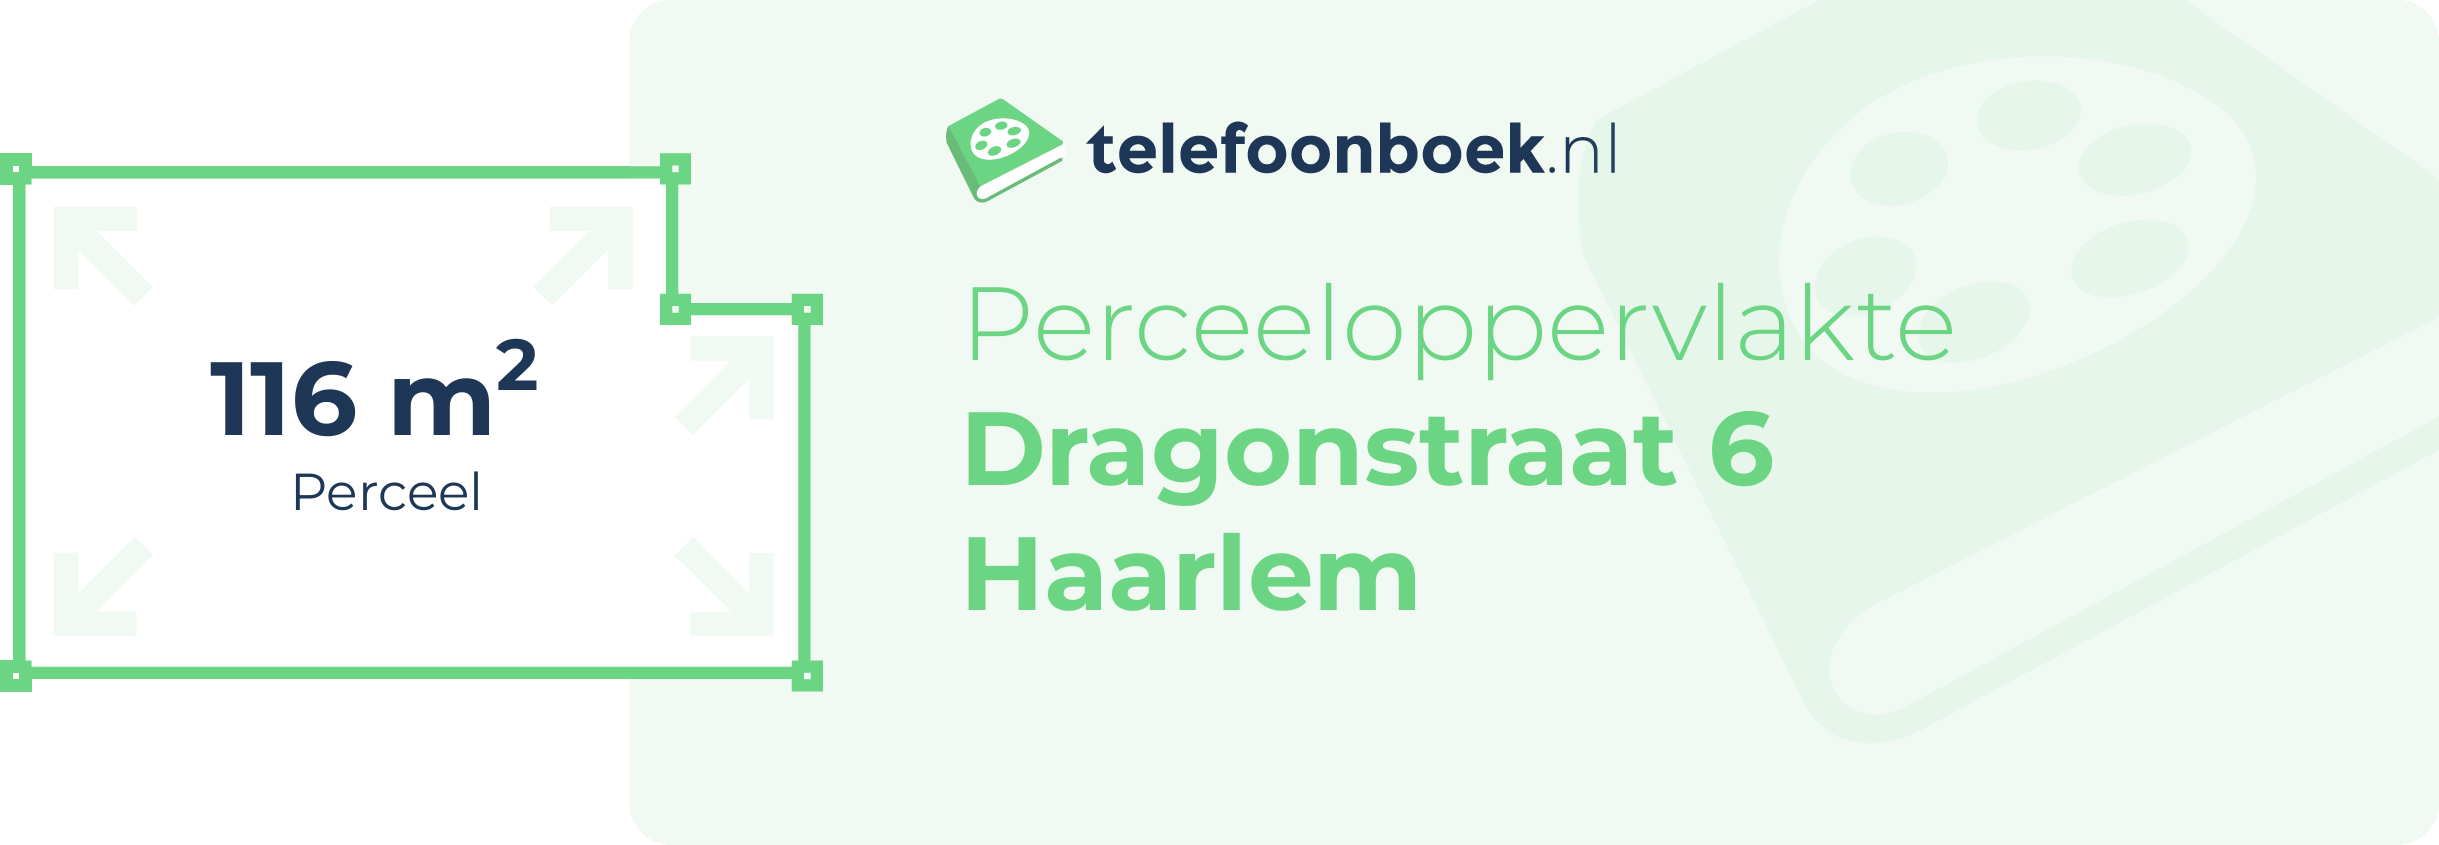 Perceeloppervlakte Dragonstraat 6 Haarlem